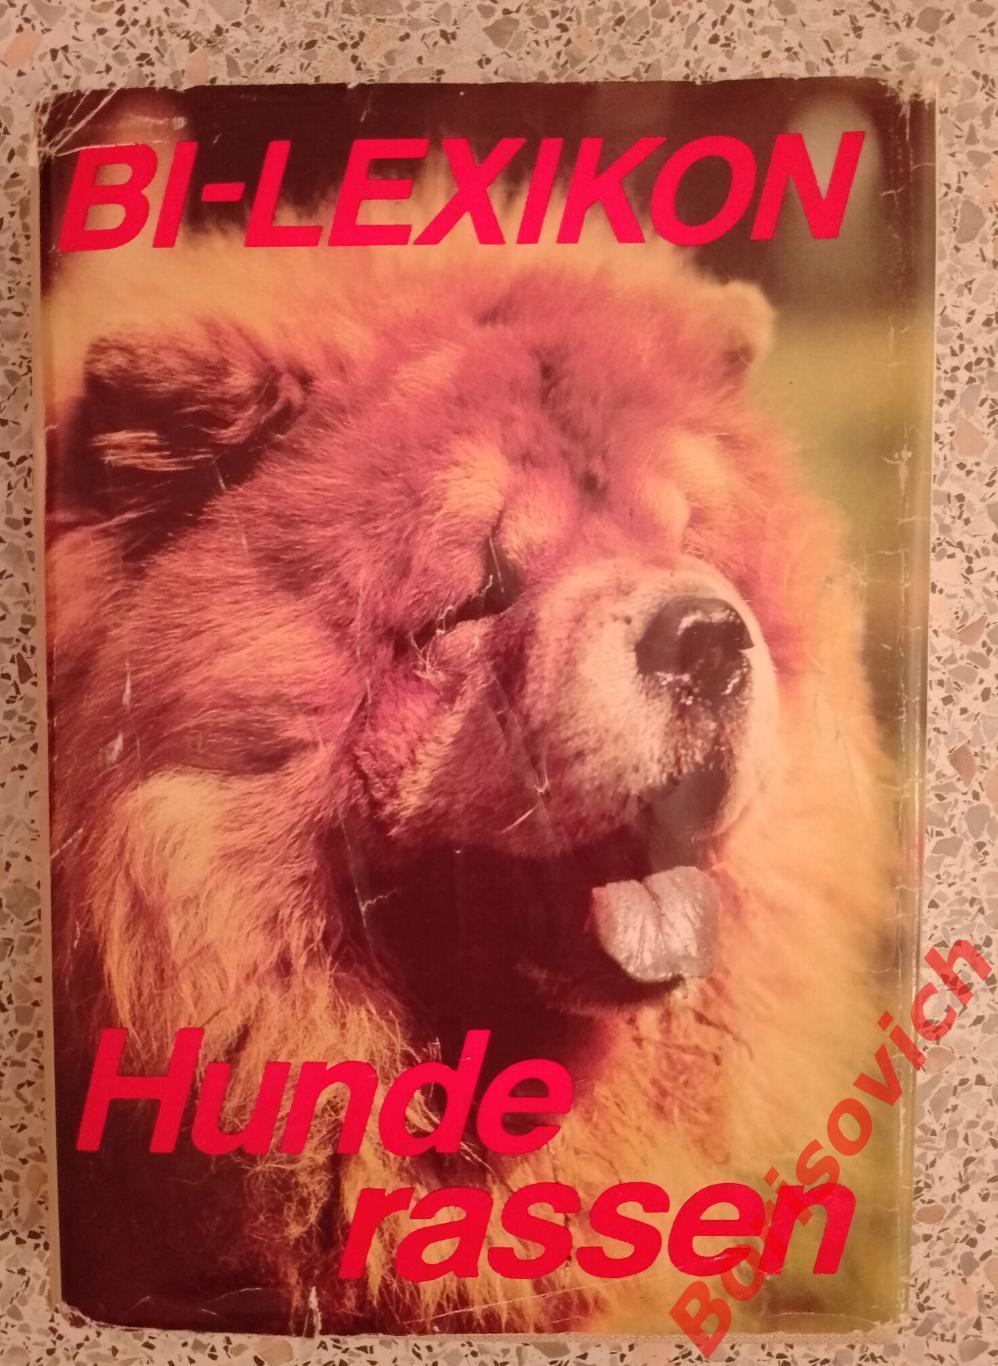 Би - лексикон Породы собак Bi - Lexikon Hunde rassen 1984 г На немецком языке